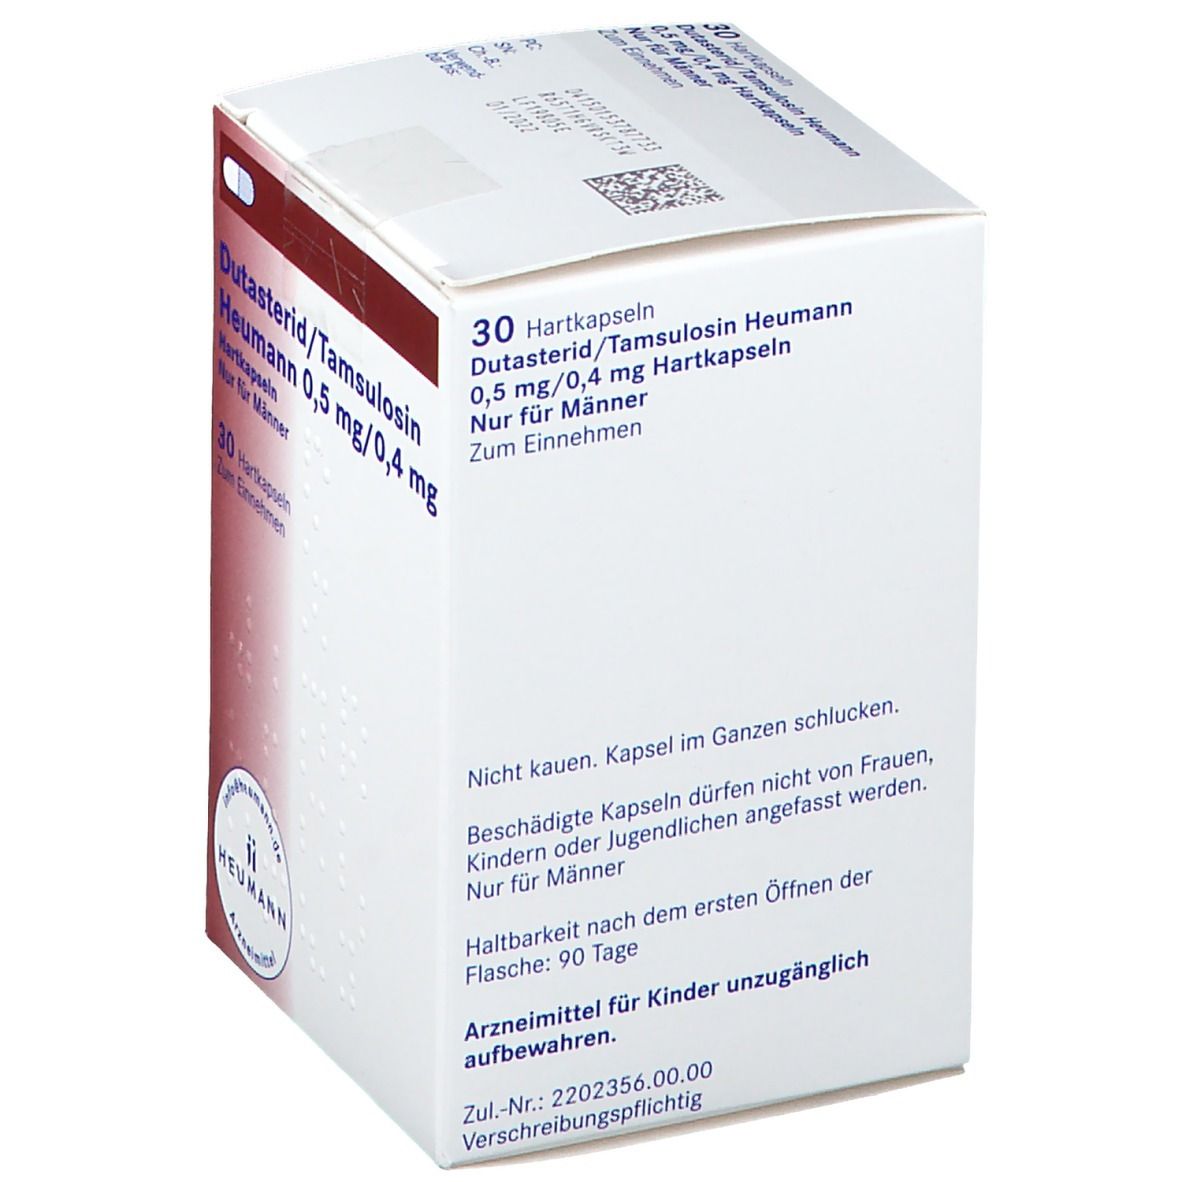 Dutasterid/Tamsulosin Heumann 0,5 mg/0,4 mg